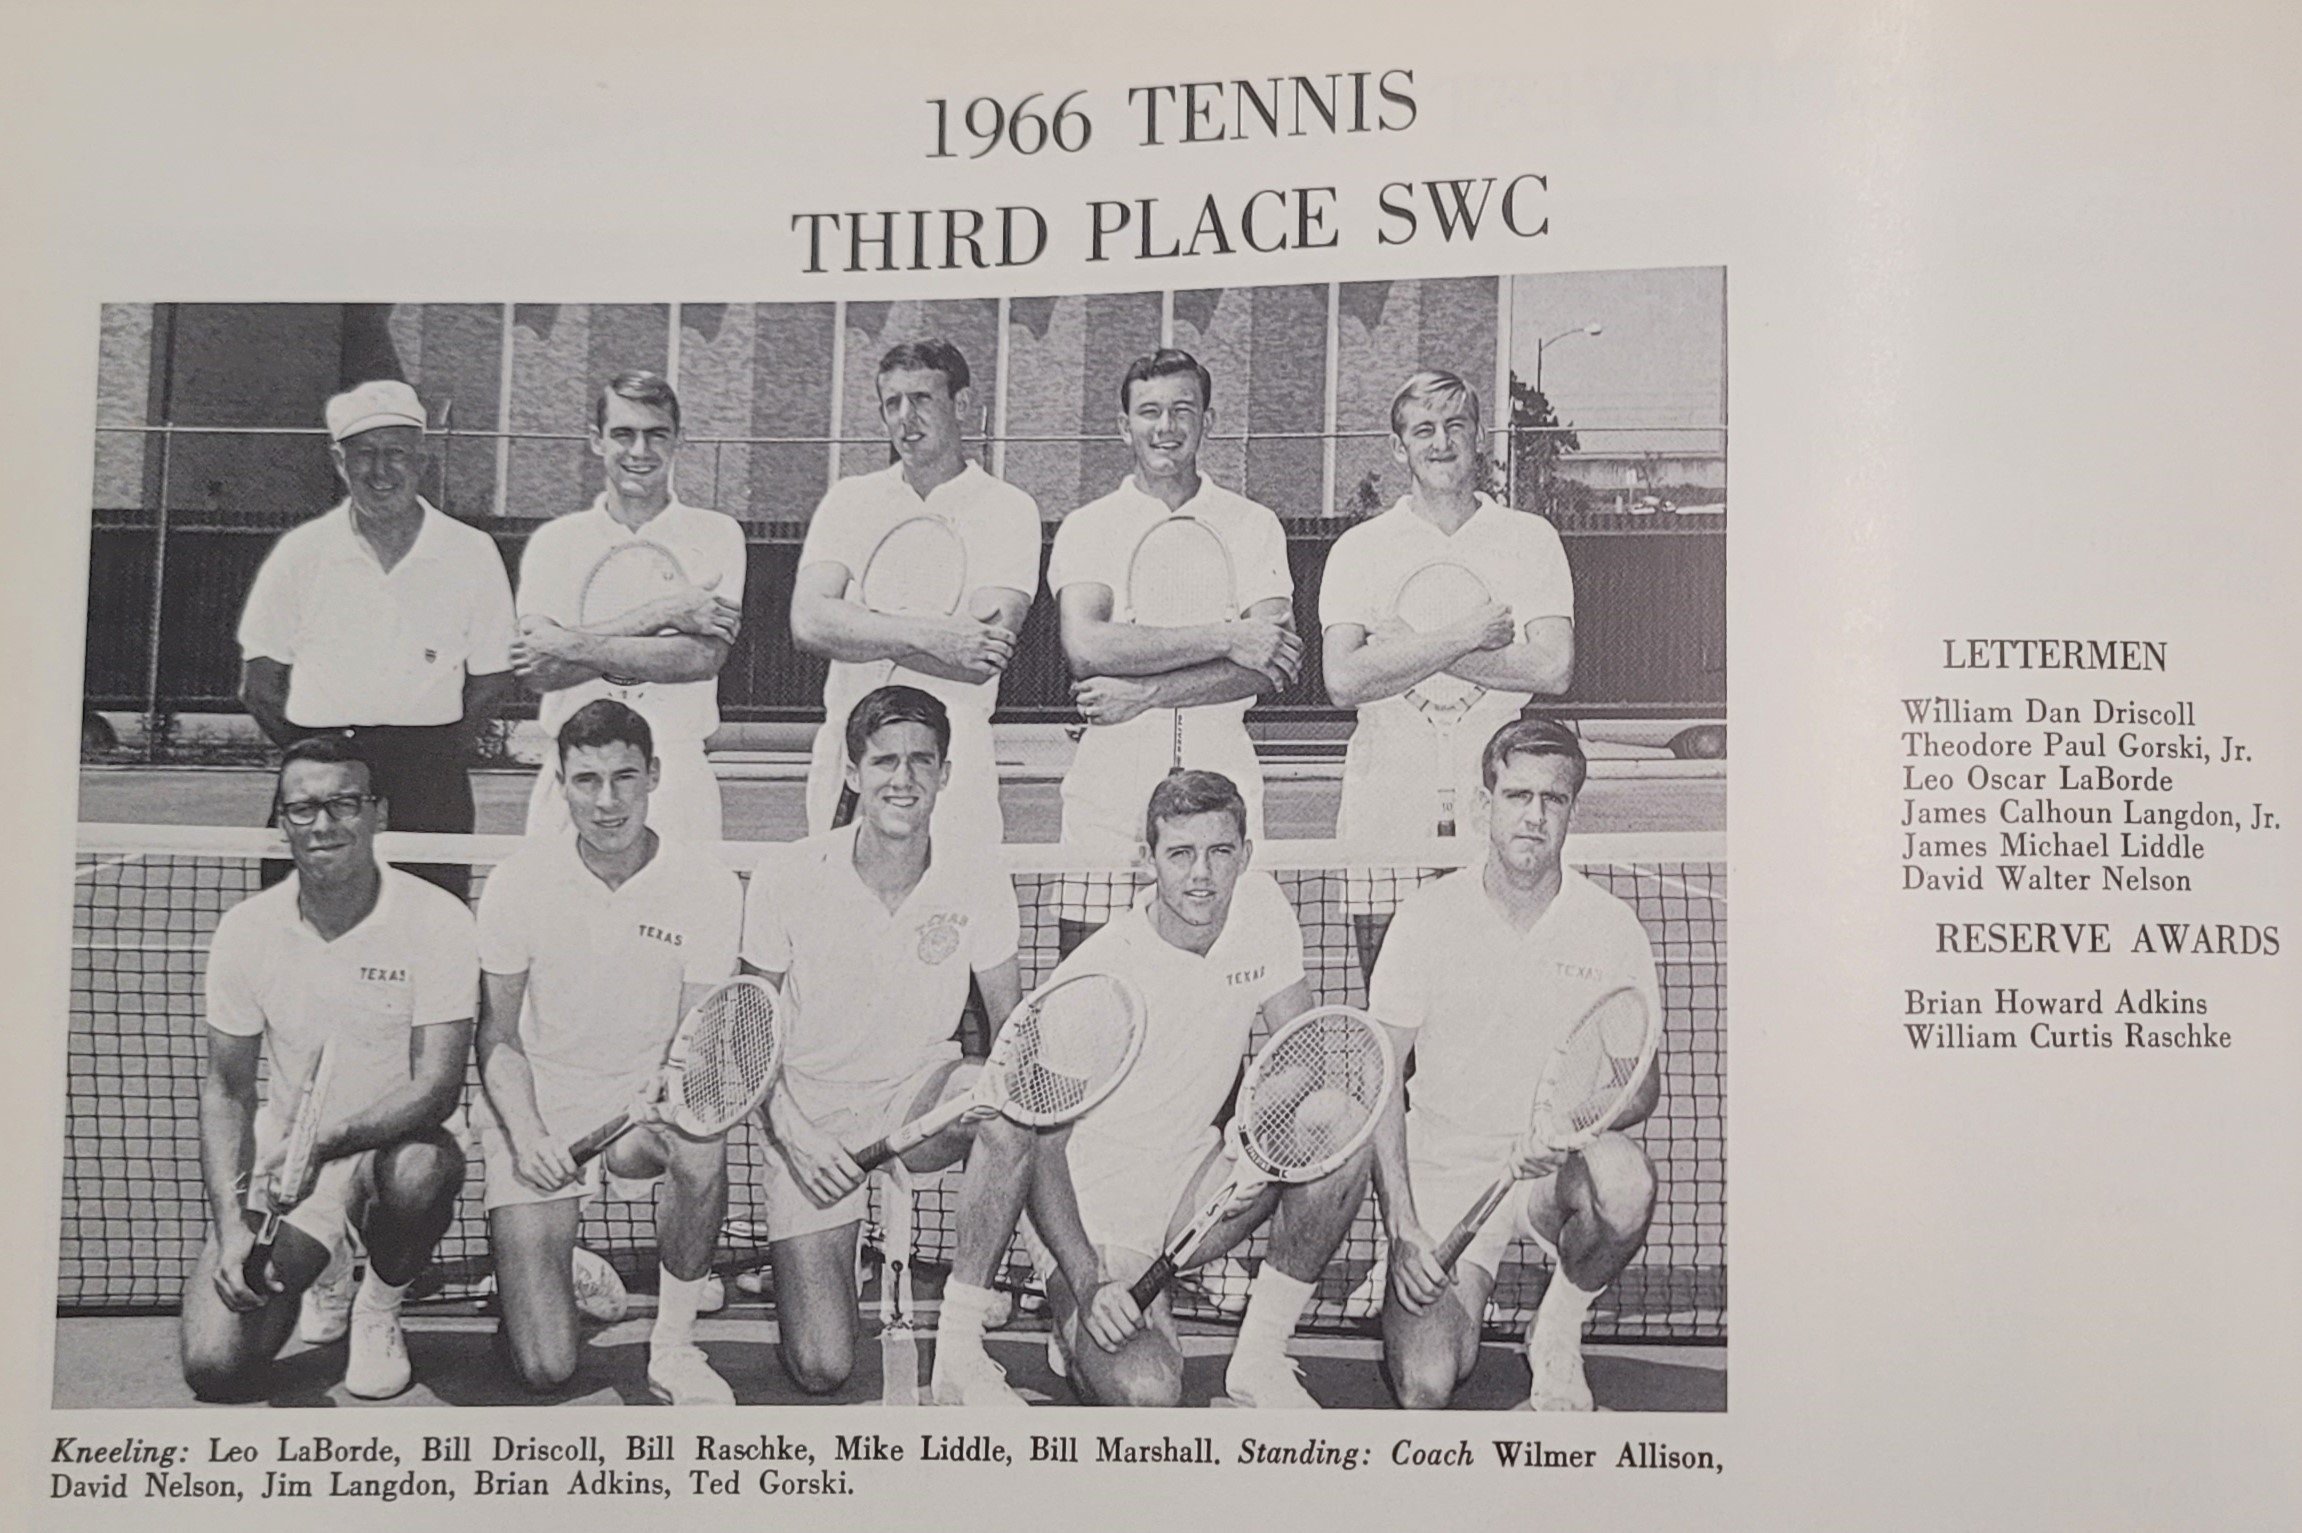  1966  tennis kneeling- LaaBorde, Driscoll, Roashke, Liddle, Marshall - standing - Allison, Nelson, Langdon, Adkins, Gorski. 